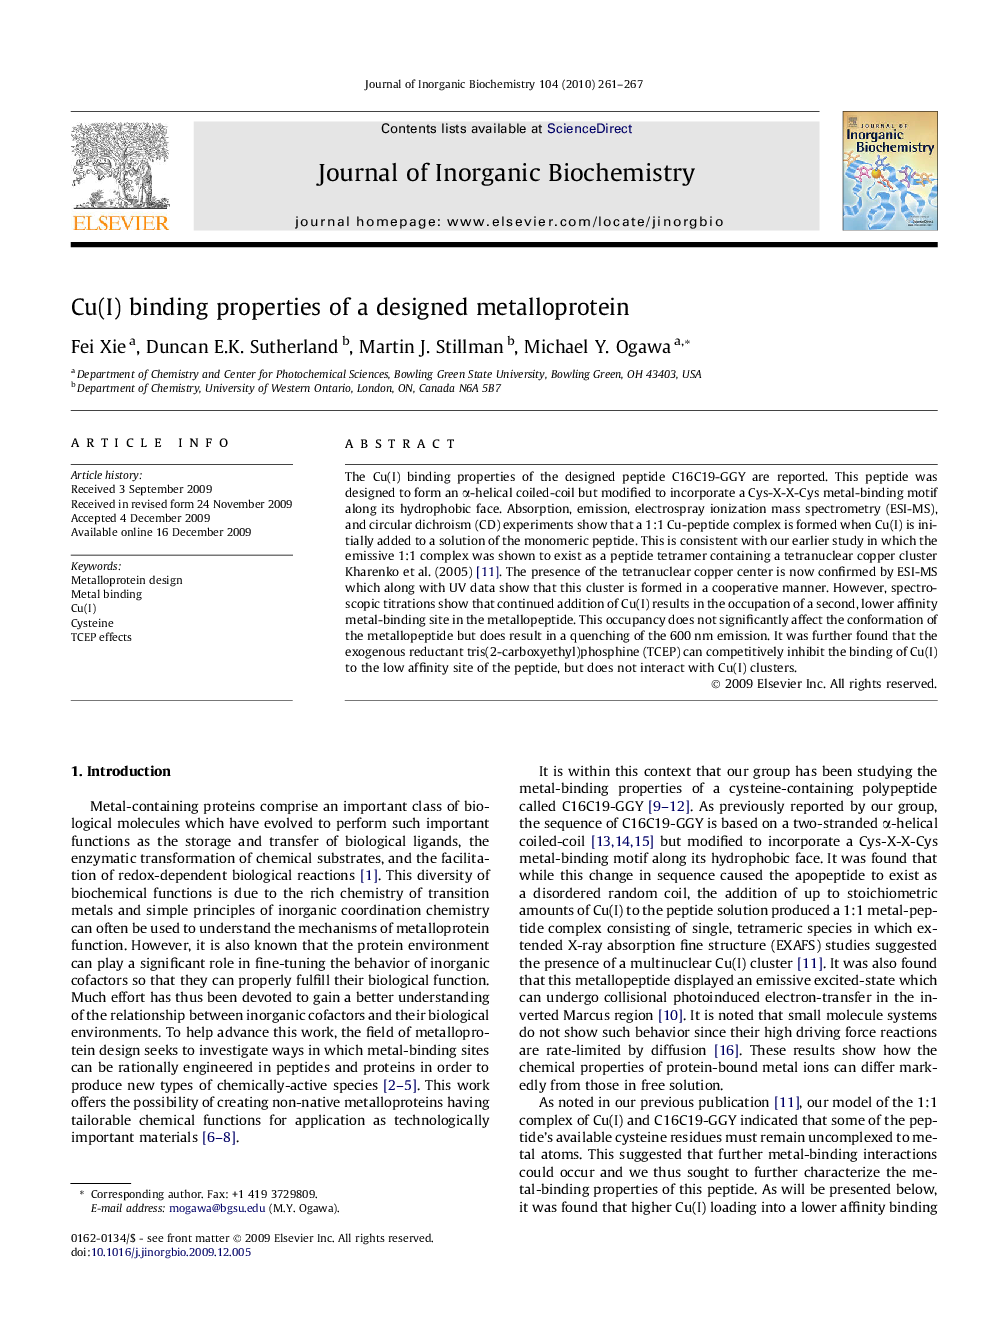 Cu(I) binding properties of a designed metalloprotein